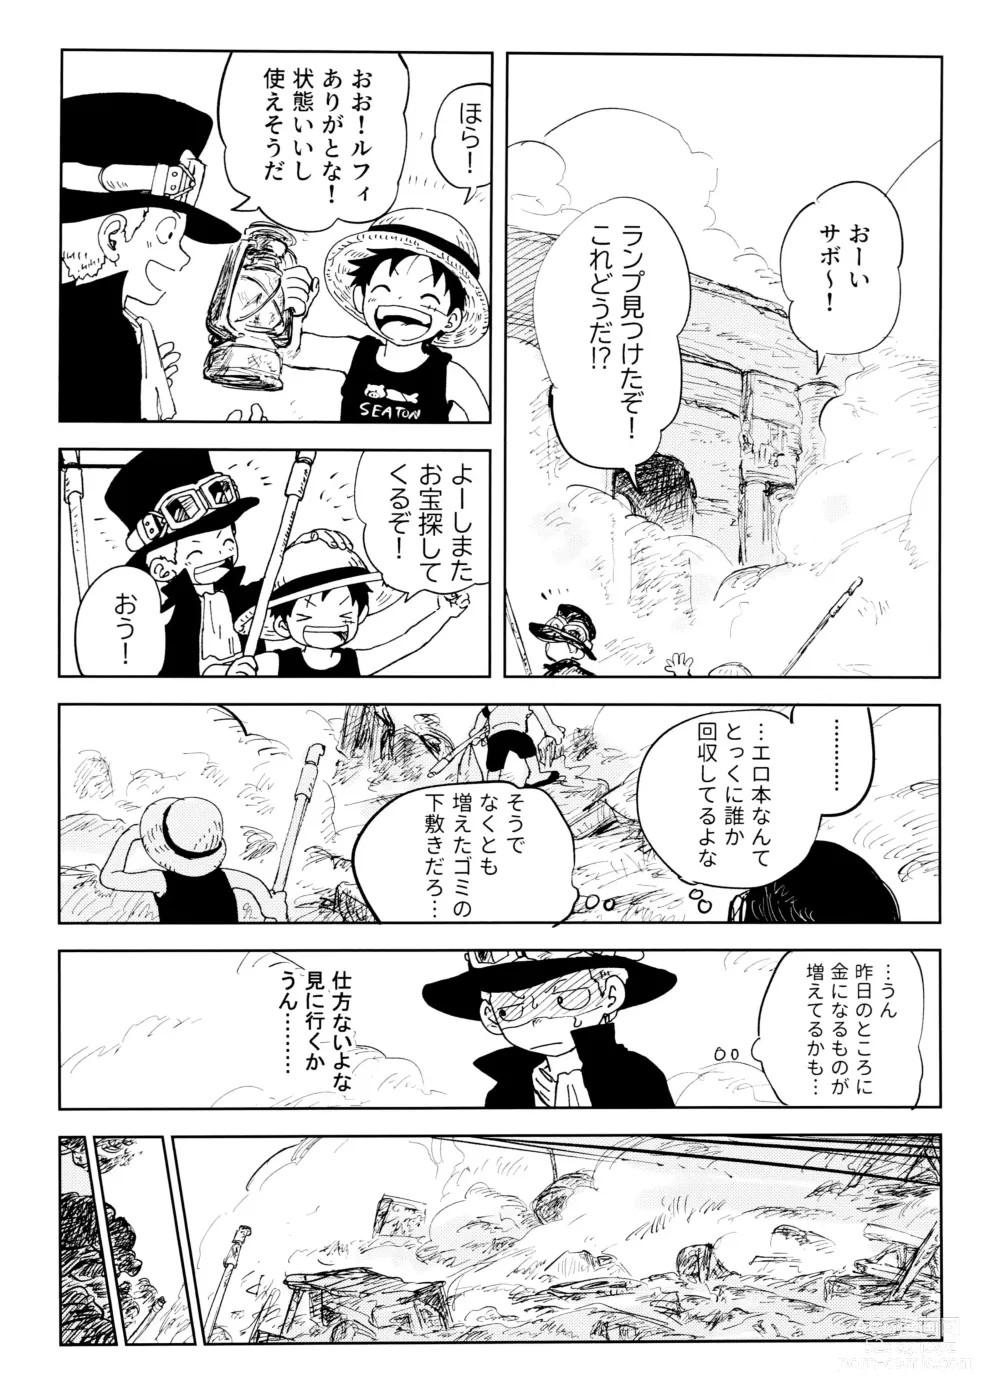 Page 17 of doujinshi Himitsu no Colubo Yama